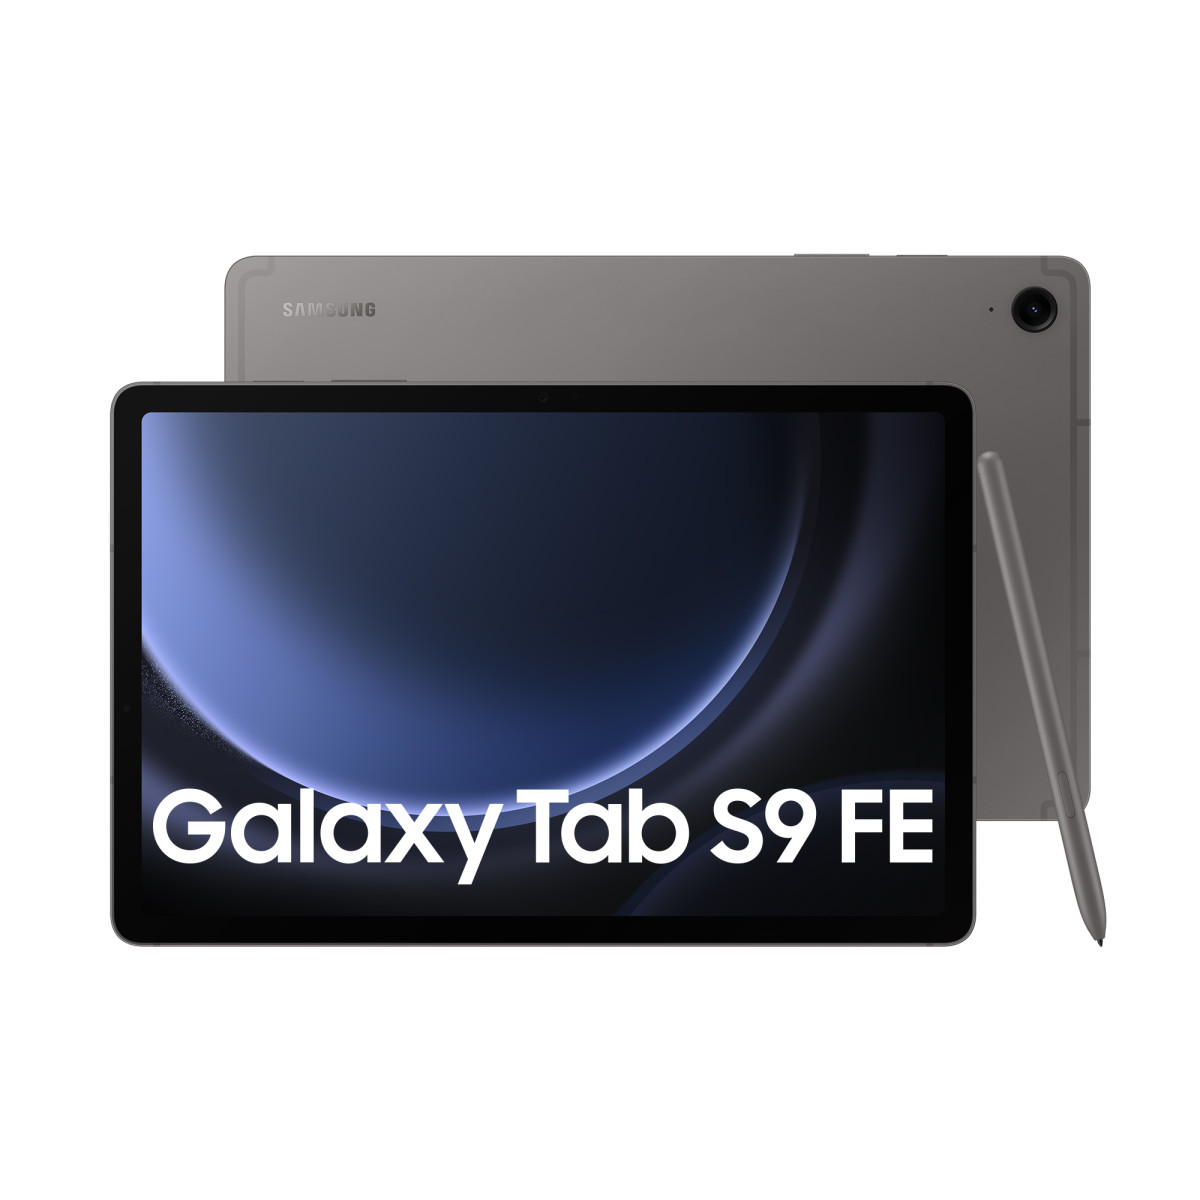 Galaxy Tab S9 FE 128GB Gray 5G